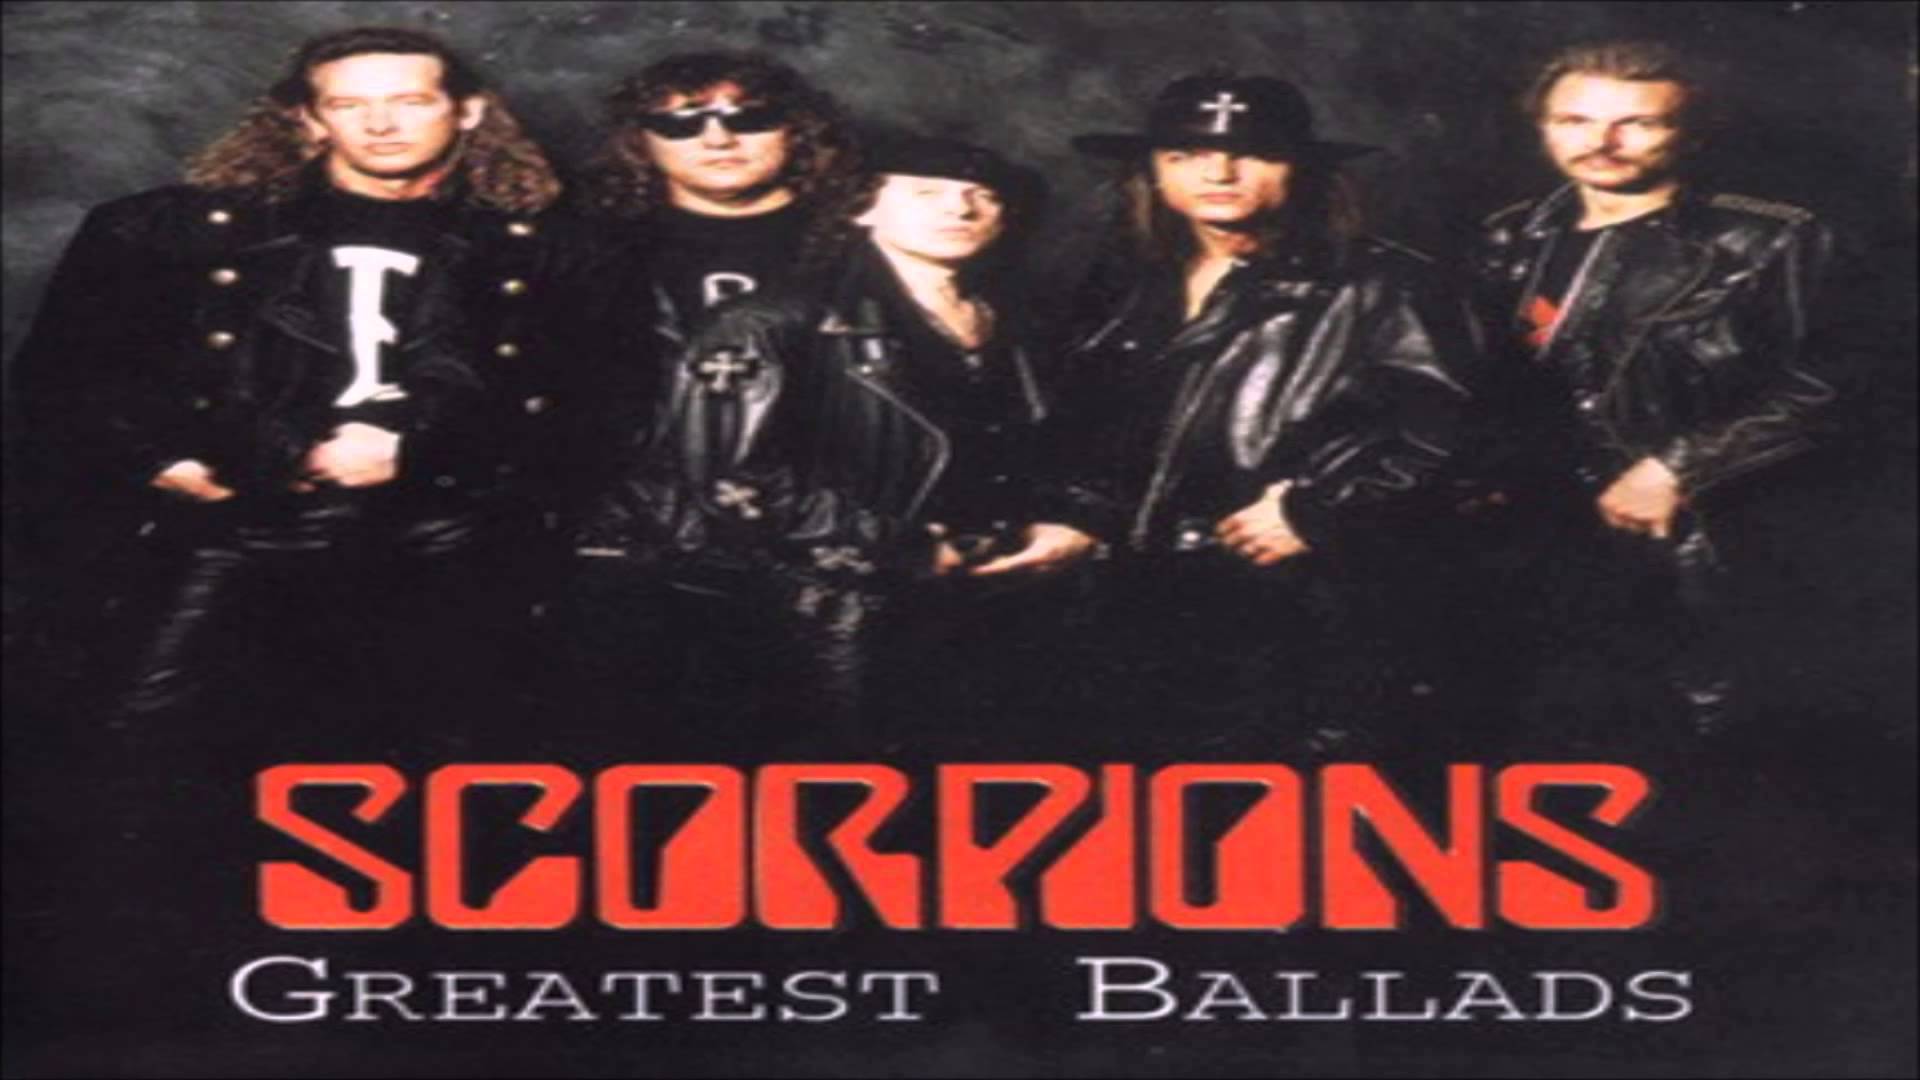 Scorpions Greatest Ballads [Full Album] - YouTube